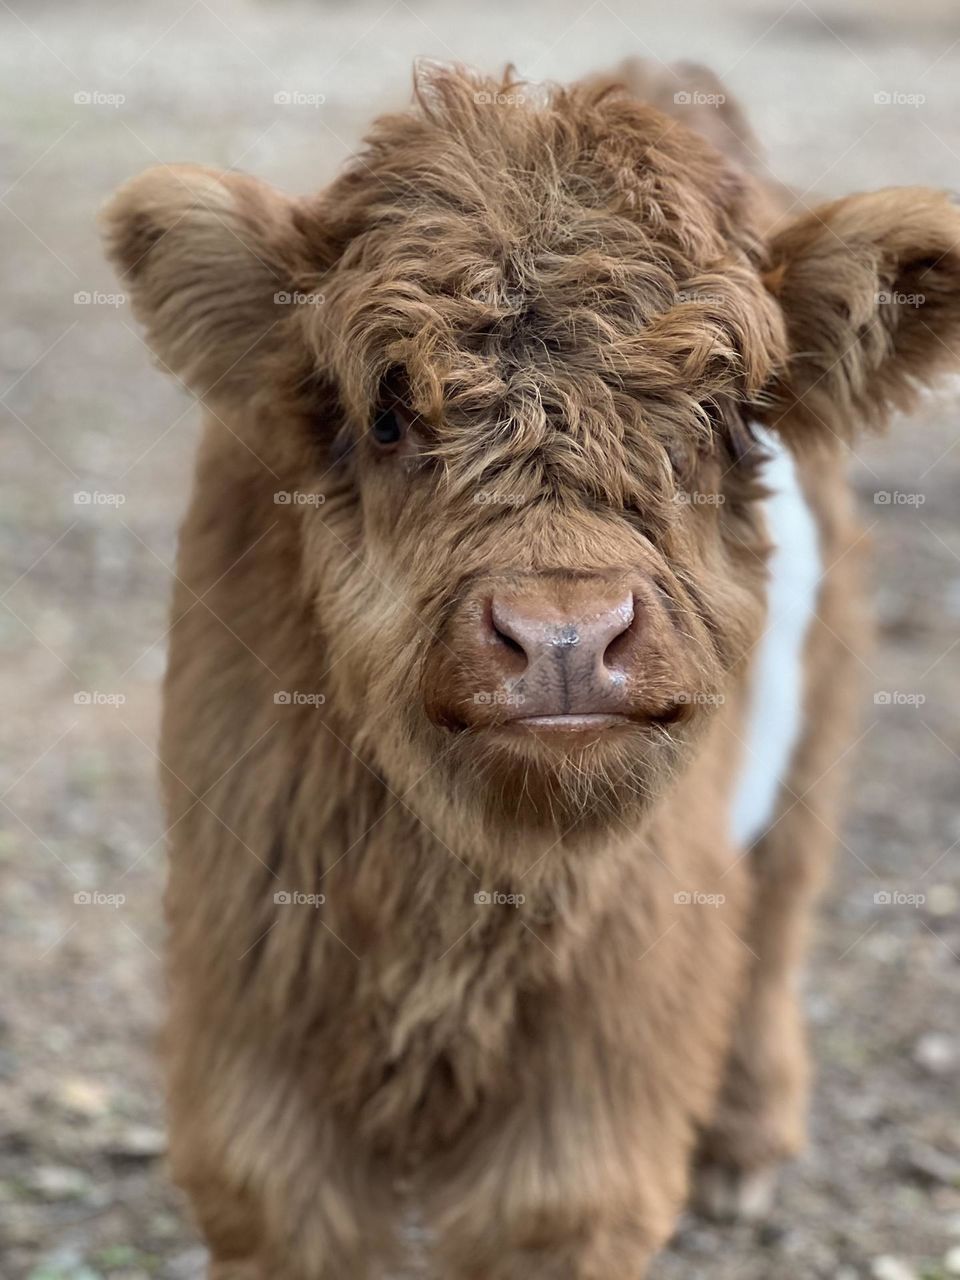 Baby Scottish Highlander Cow